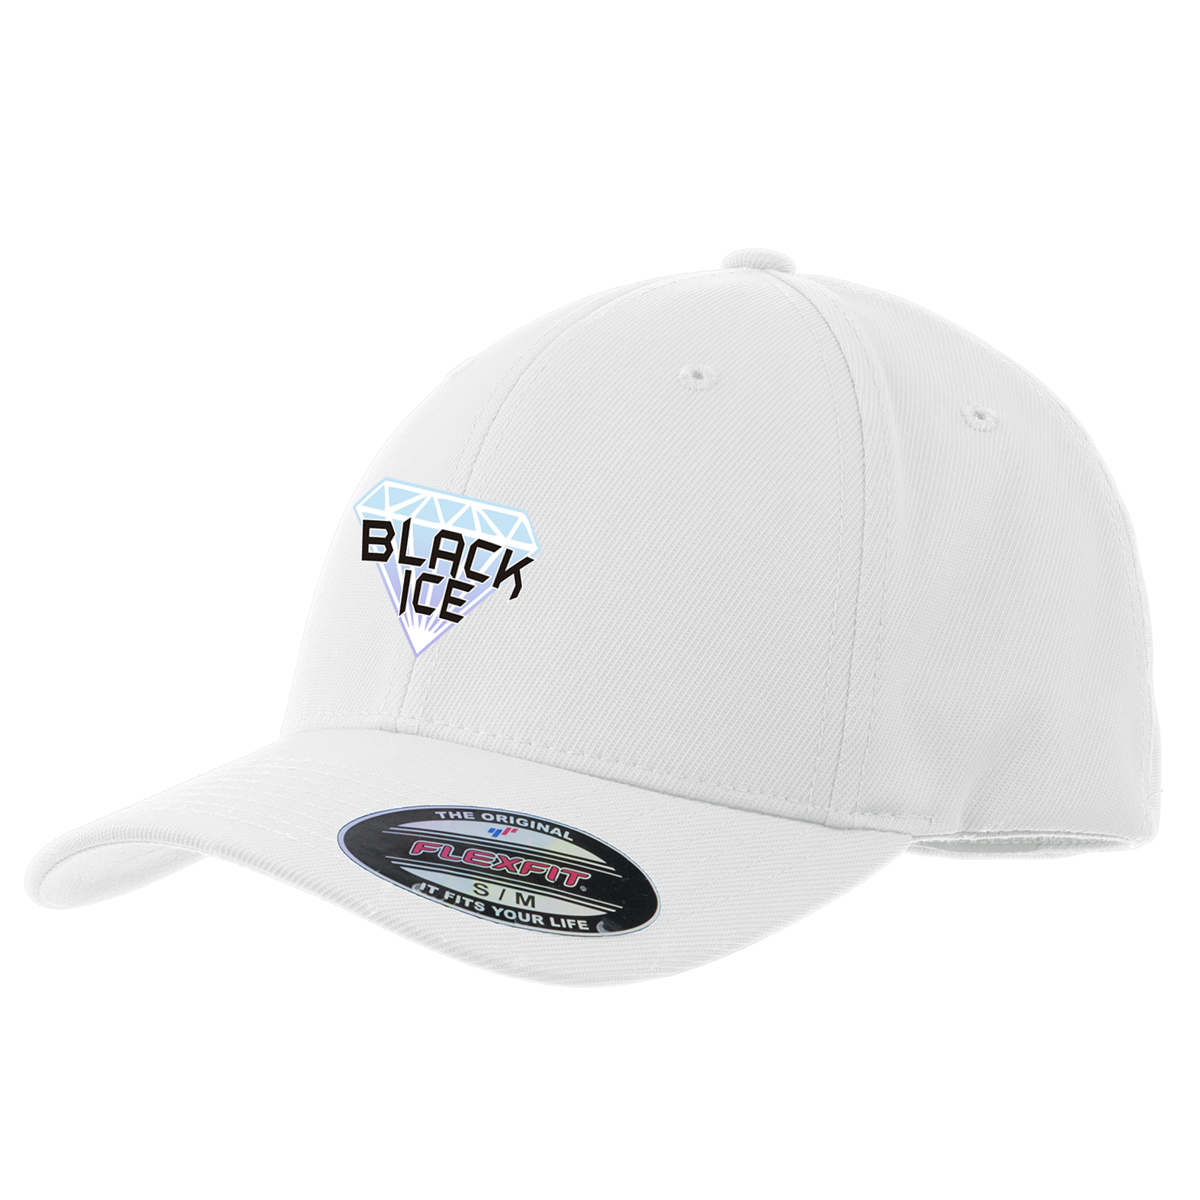 Black Ice Softball Gameday Flex-Fit Hat